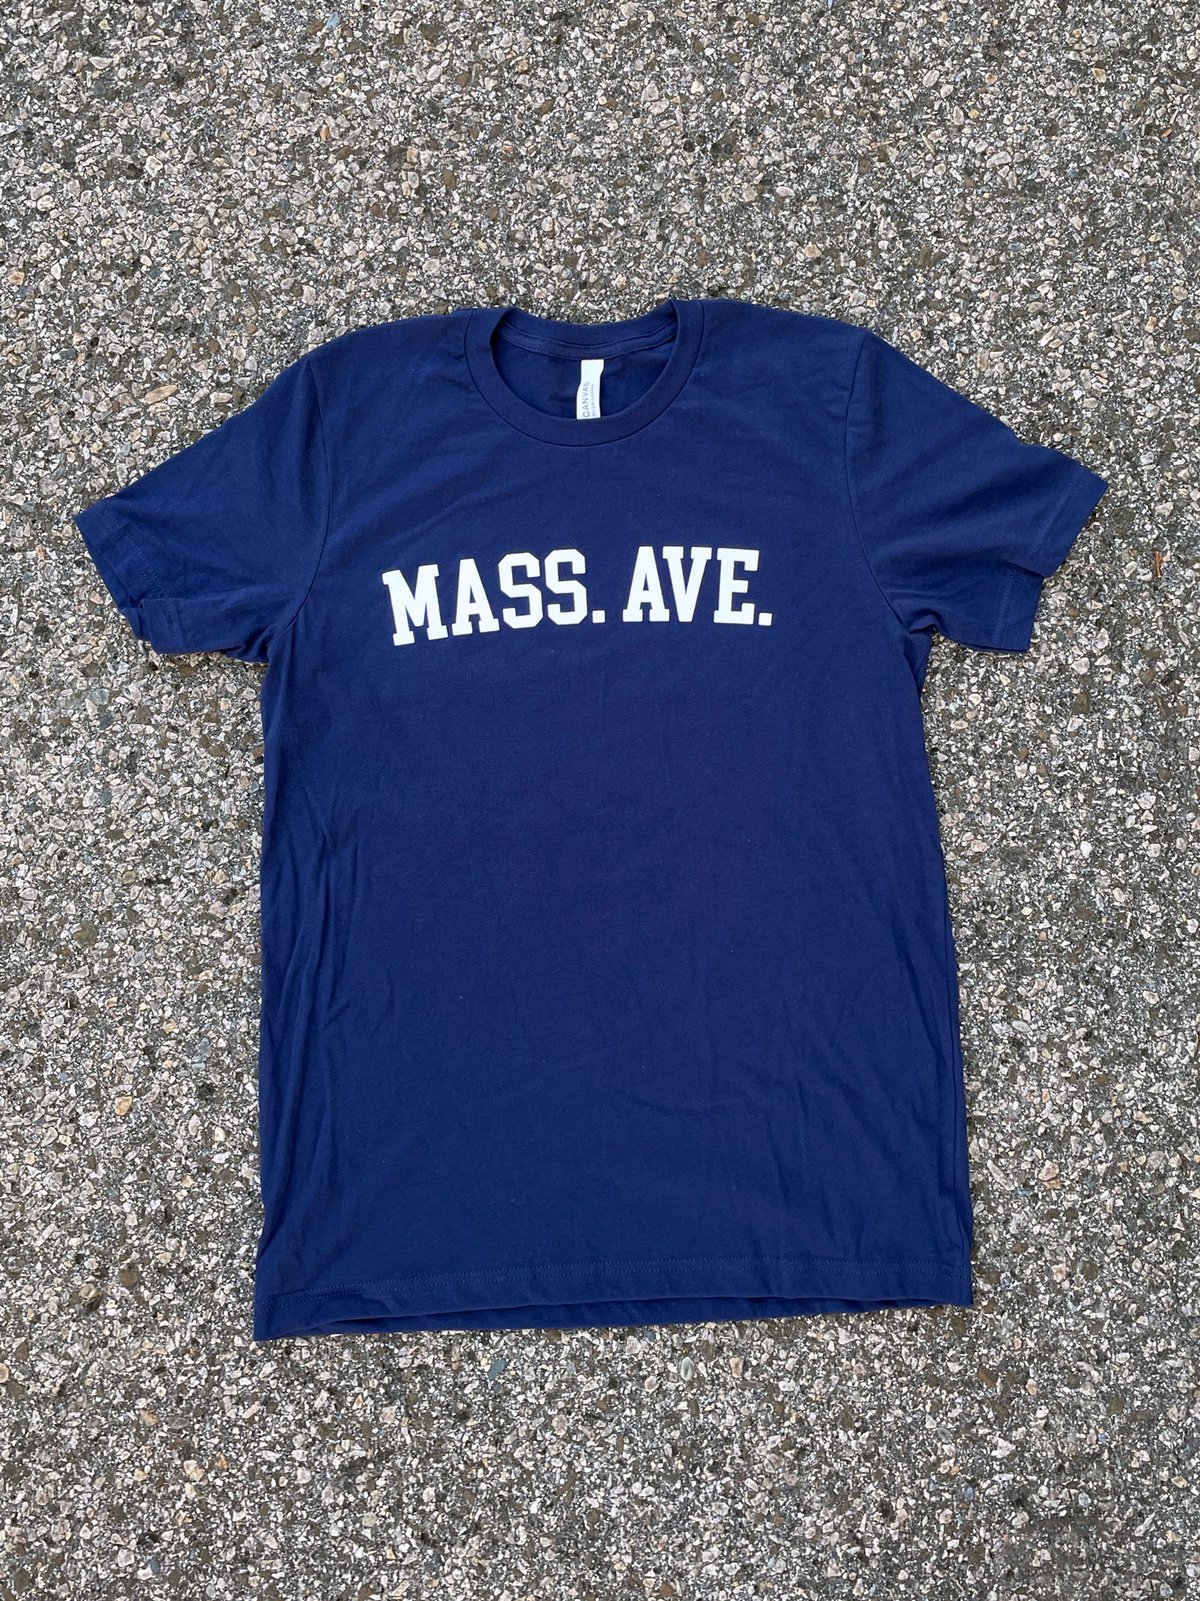 Image of Mass. Ave. Unisex T‑Shirt - Free Shipping